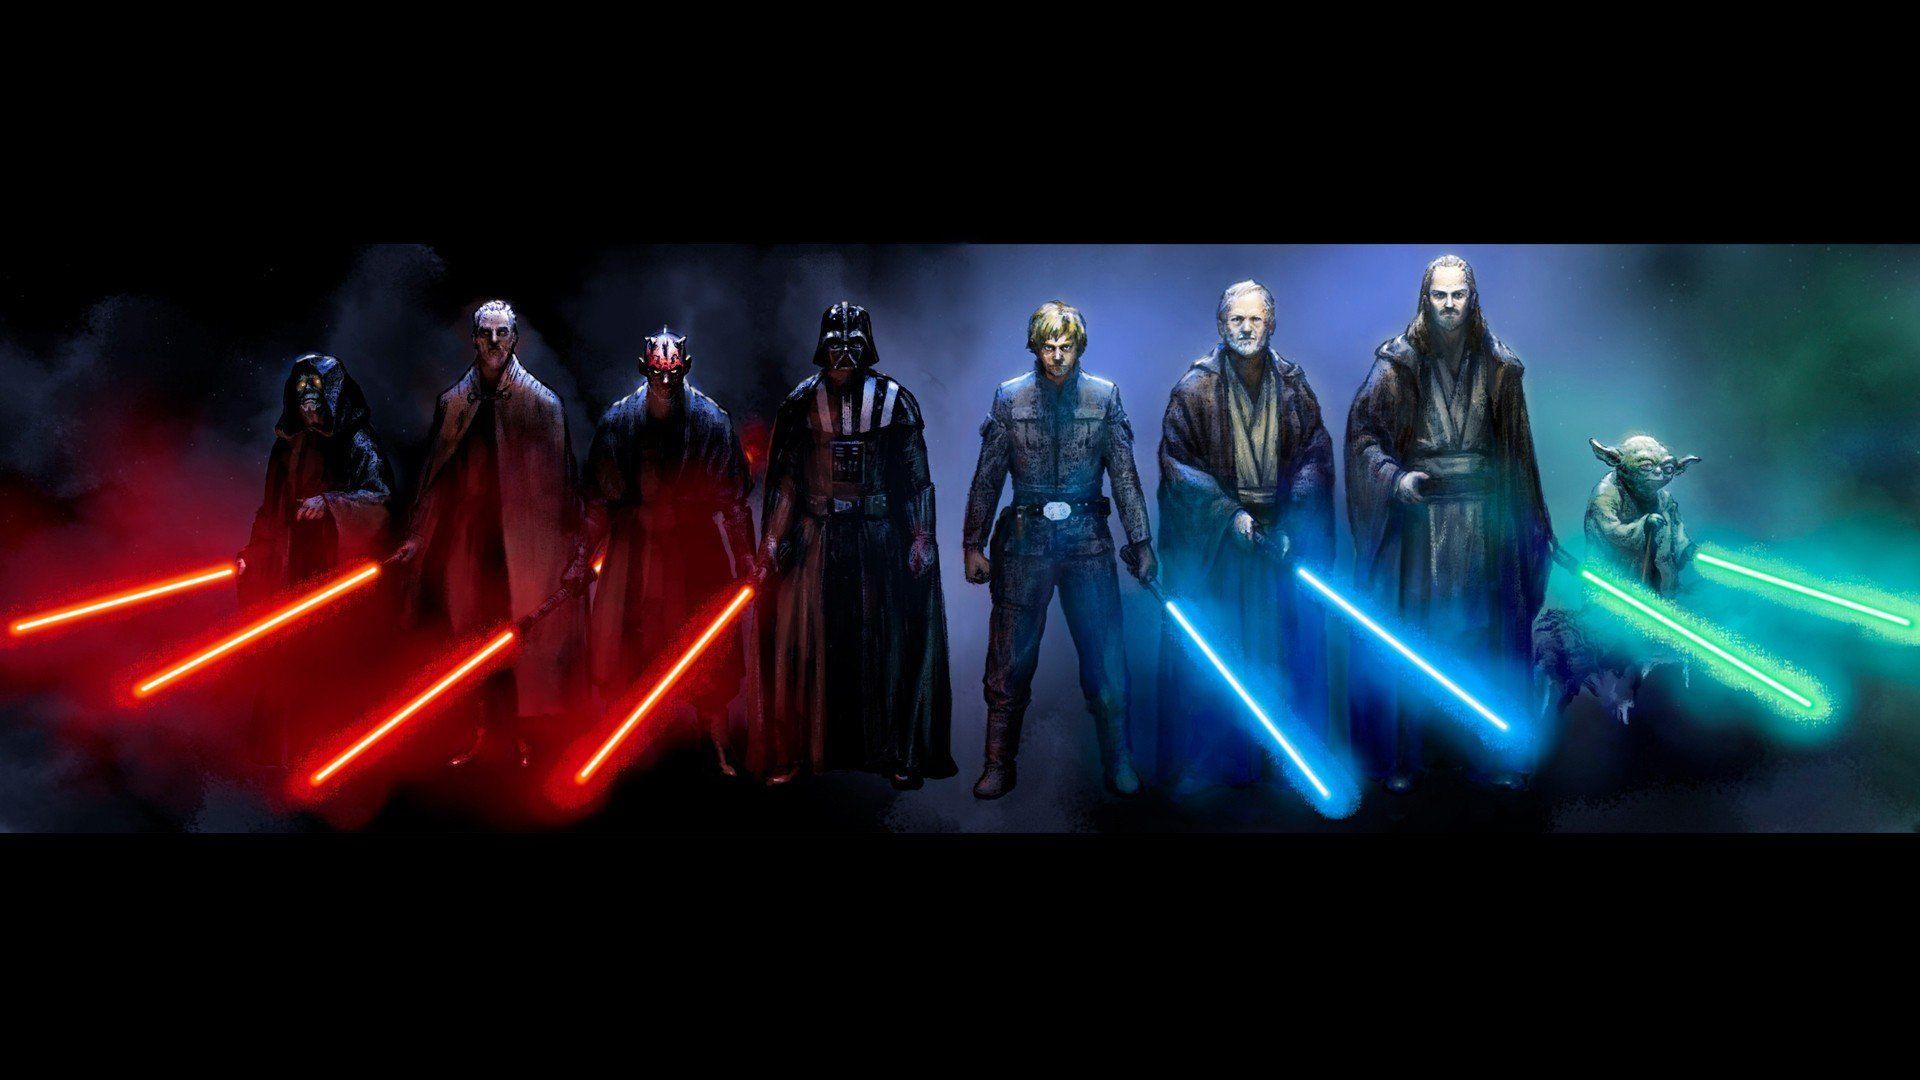 Wallpaper HD Of Star Wars Lightsaber Charactersfull Pics Desktop